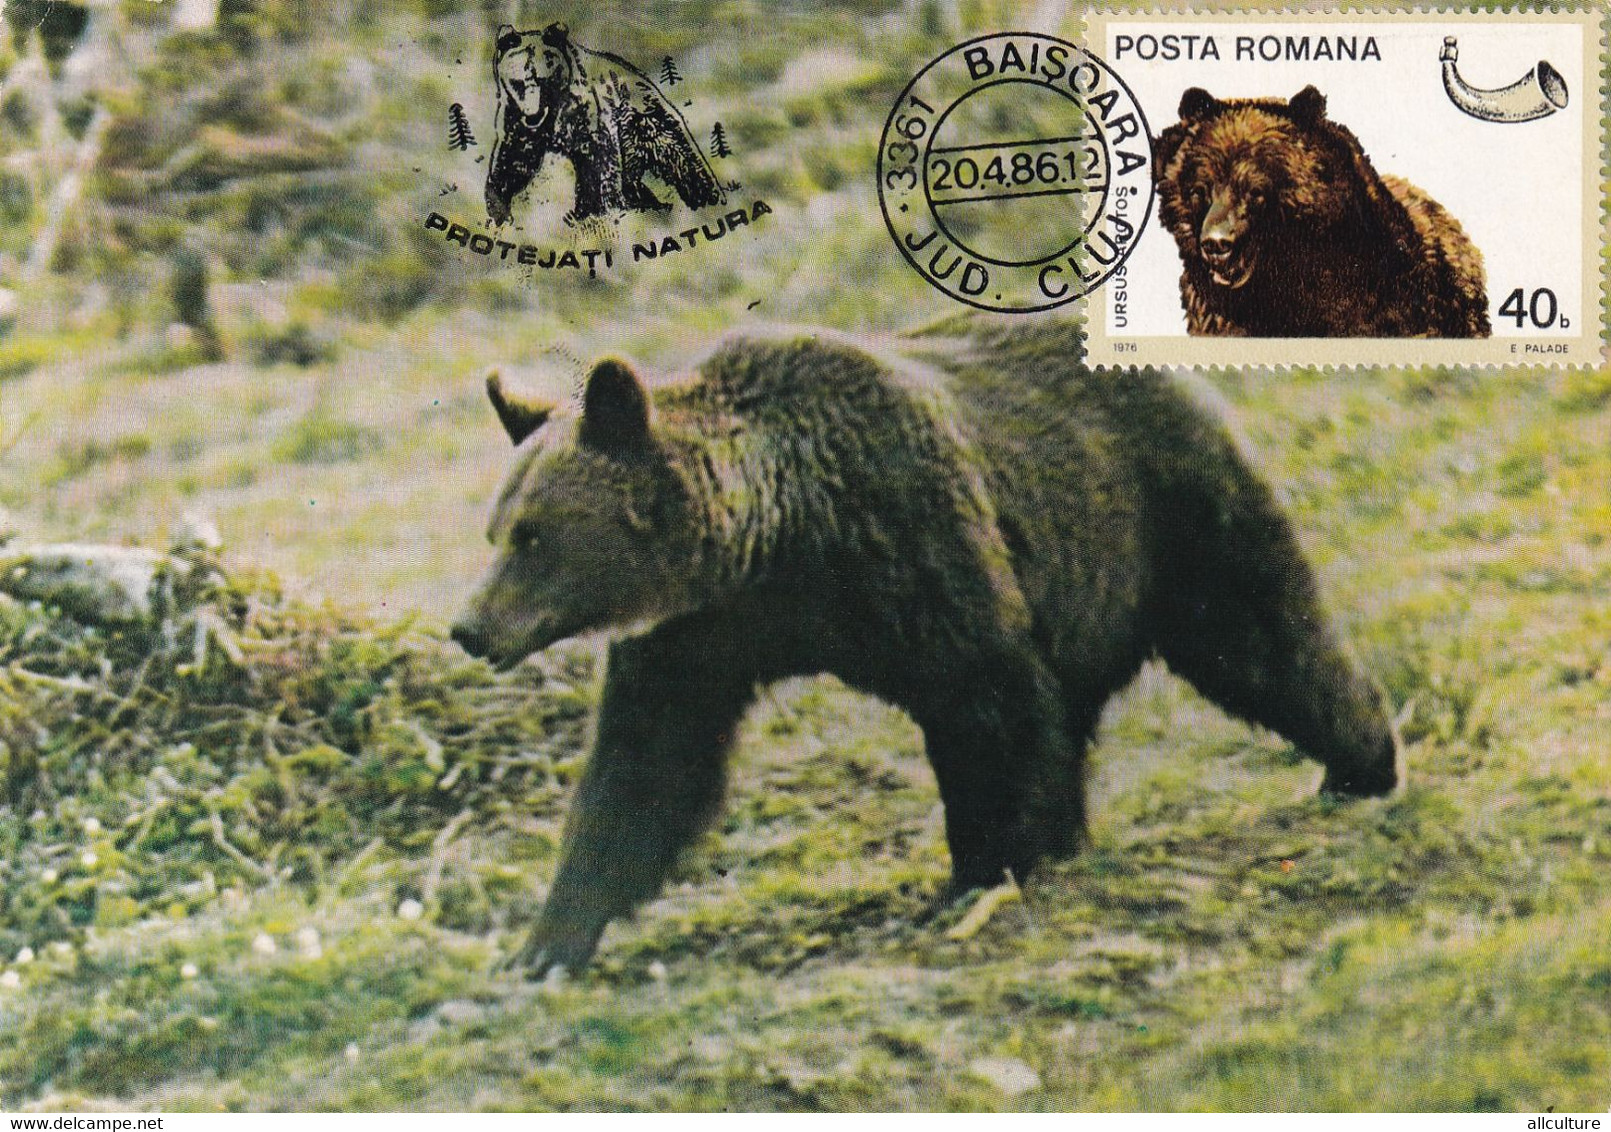 A9053- URSUS ARCTOS, BROWN BEAR, BAISOARA 1986 MAX CARD ROMANIA  USED STAMP ON BACK - Bears